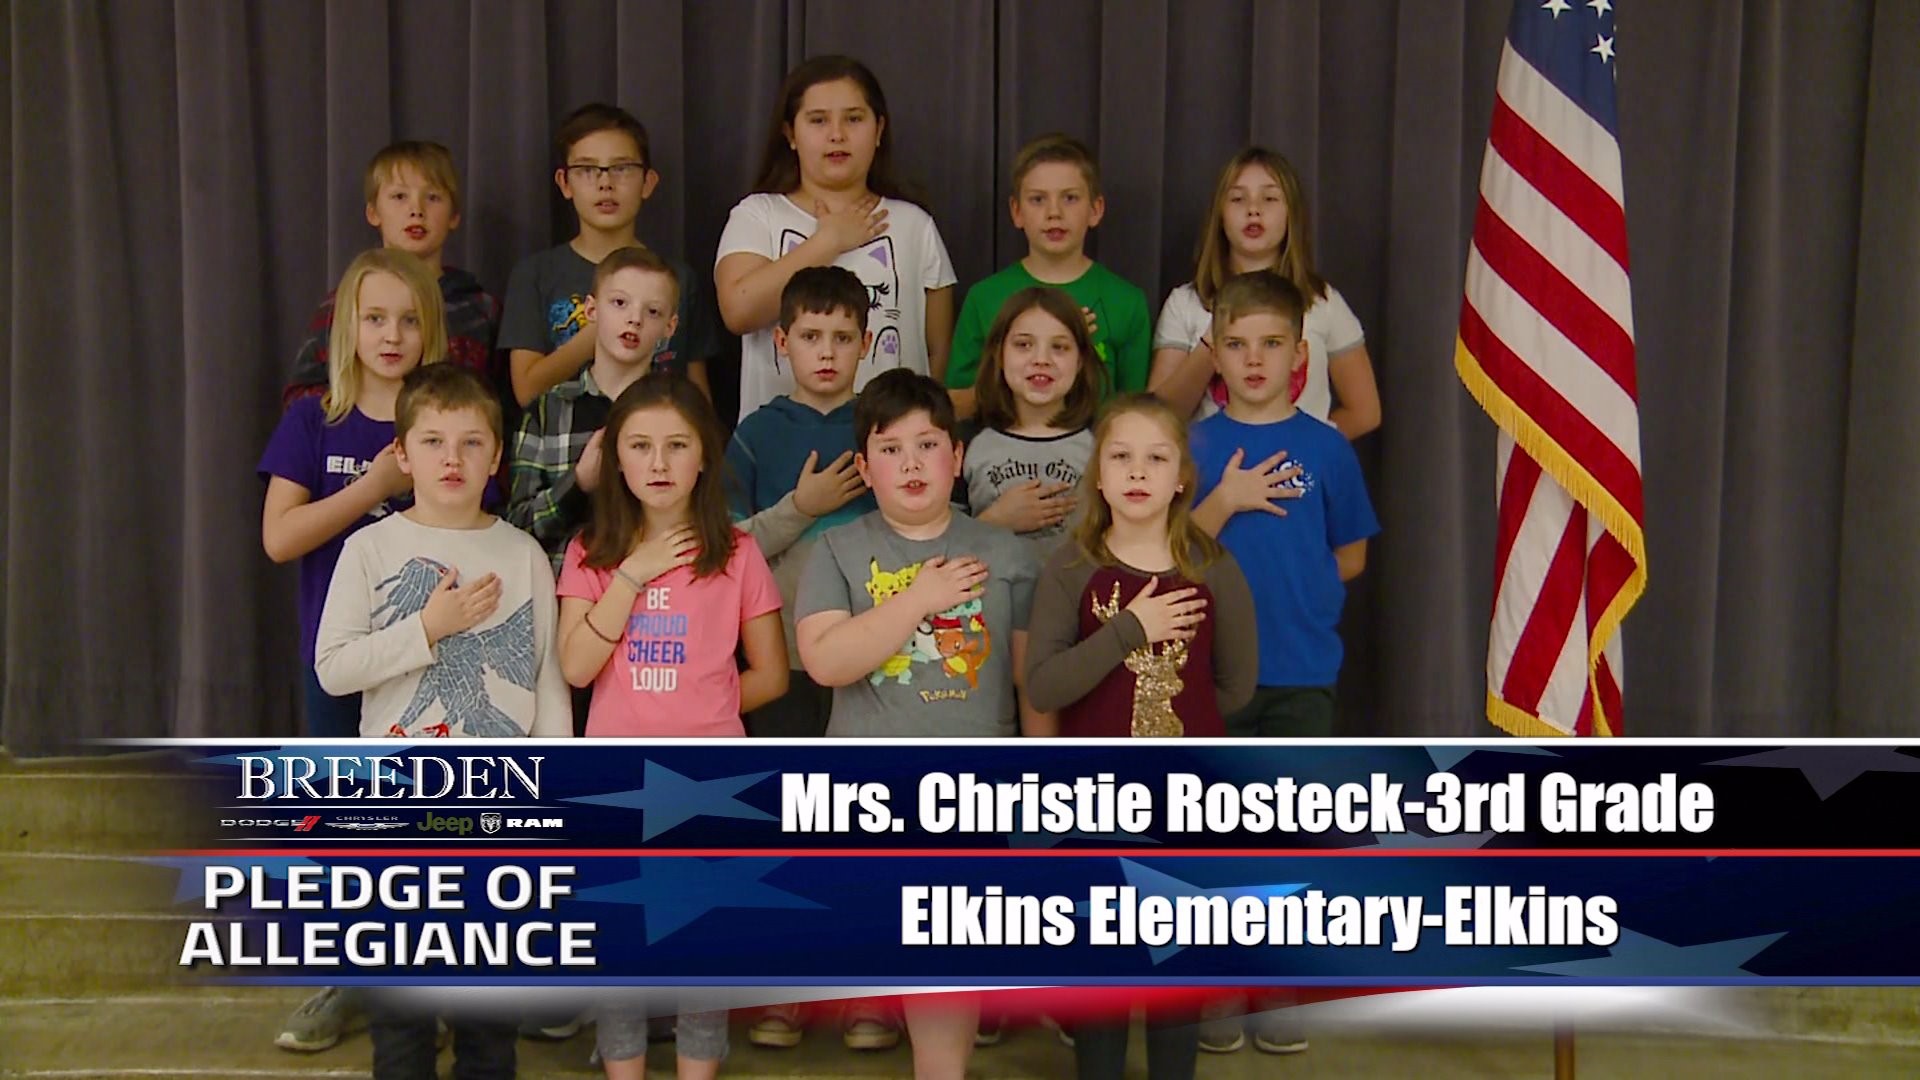 Mrs. Christie Rosteck - 3rd Grade Elkins Elementary, Elkins